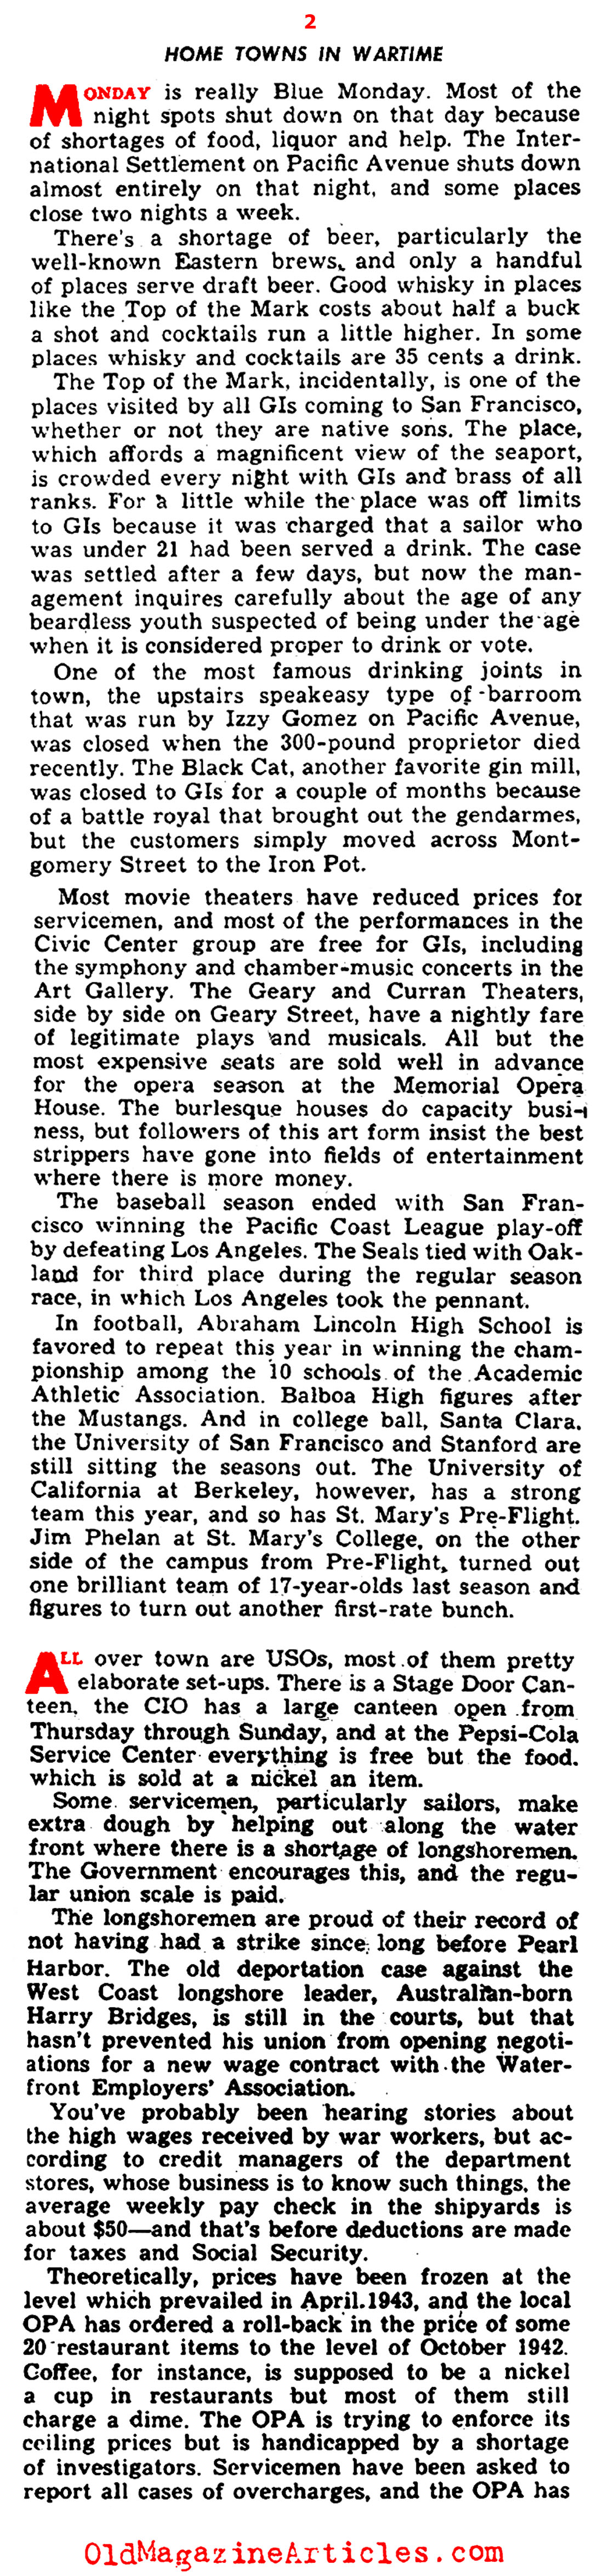 The San Francisco Home Front (Yank Magazine, 1944)